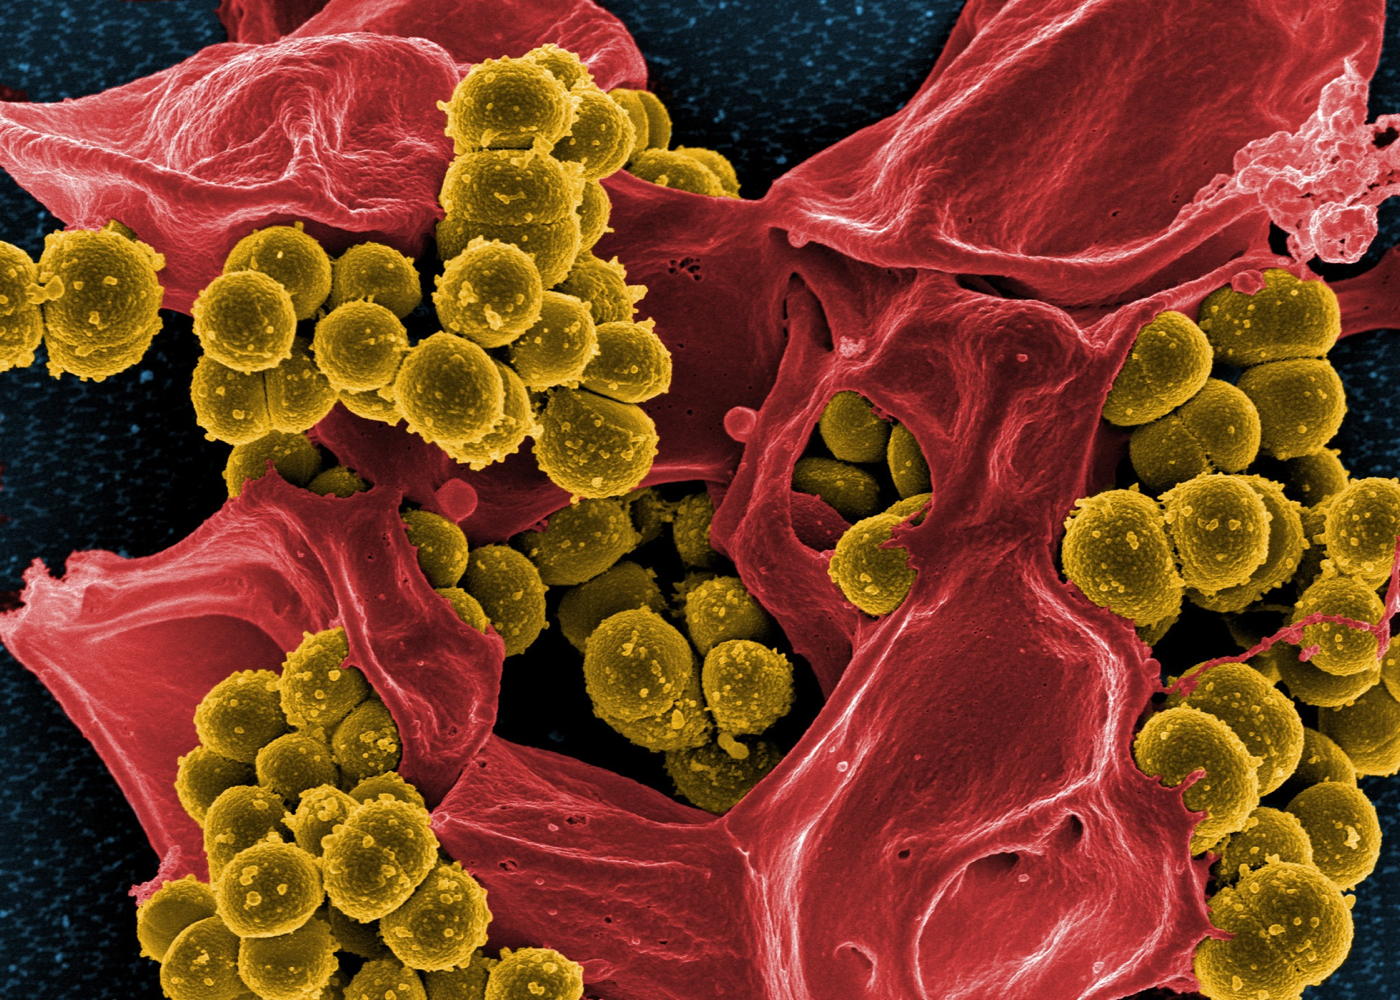 Methicillin-resistant Staph bacteria